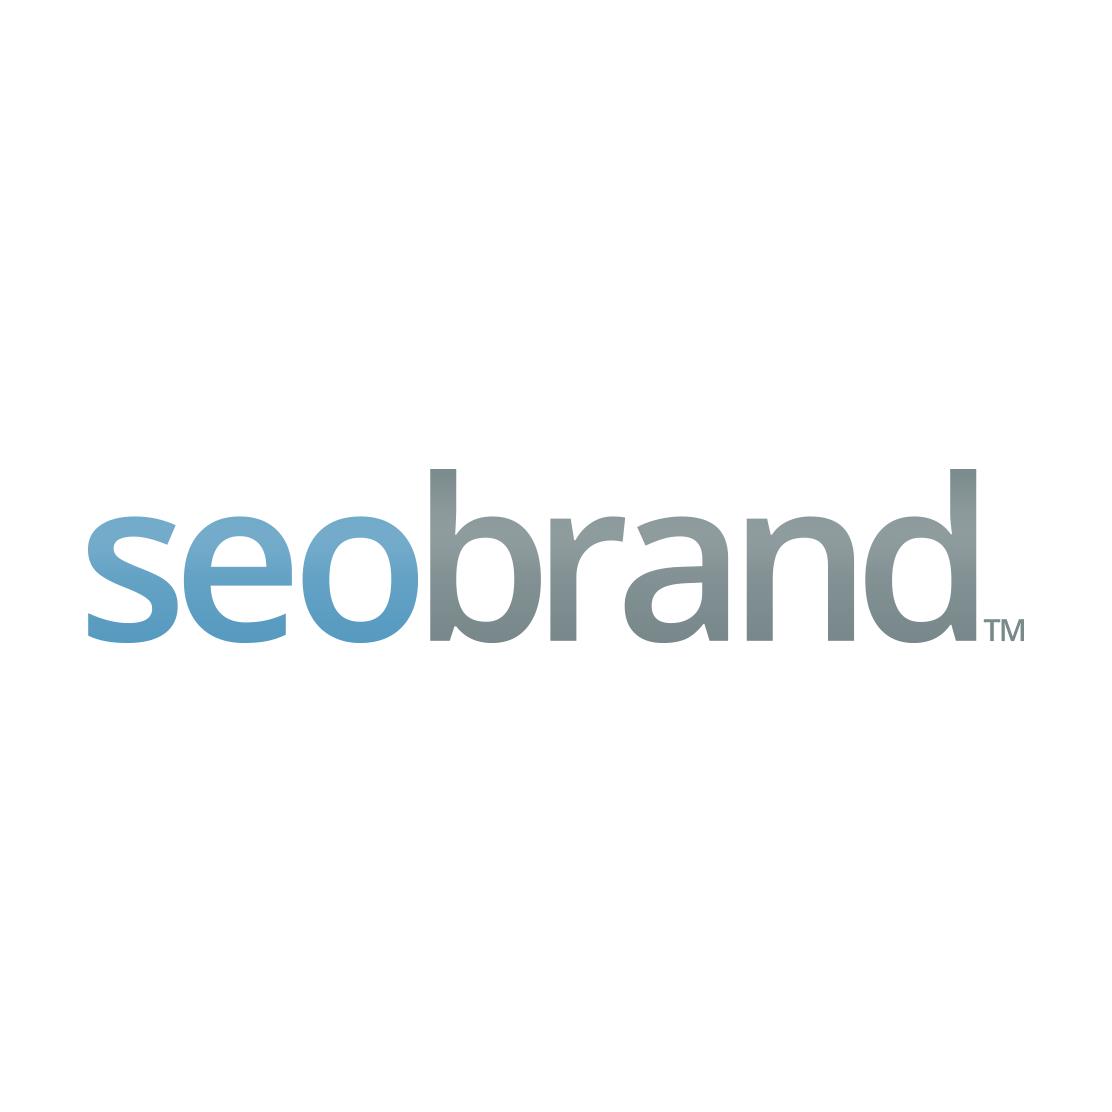 Top Philly SEO Agency Logo: SEO Brand